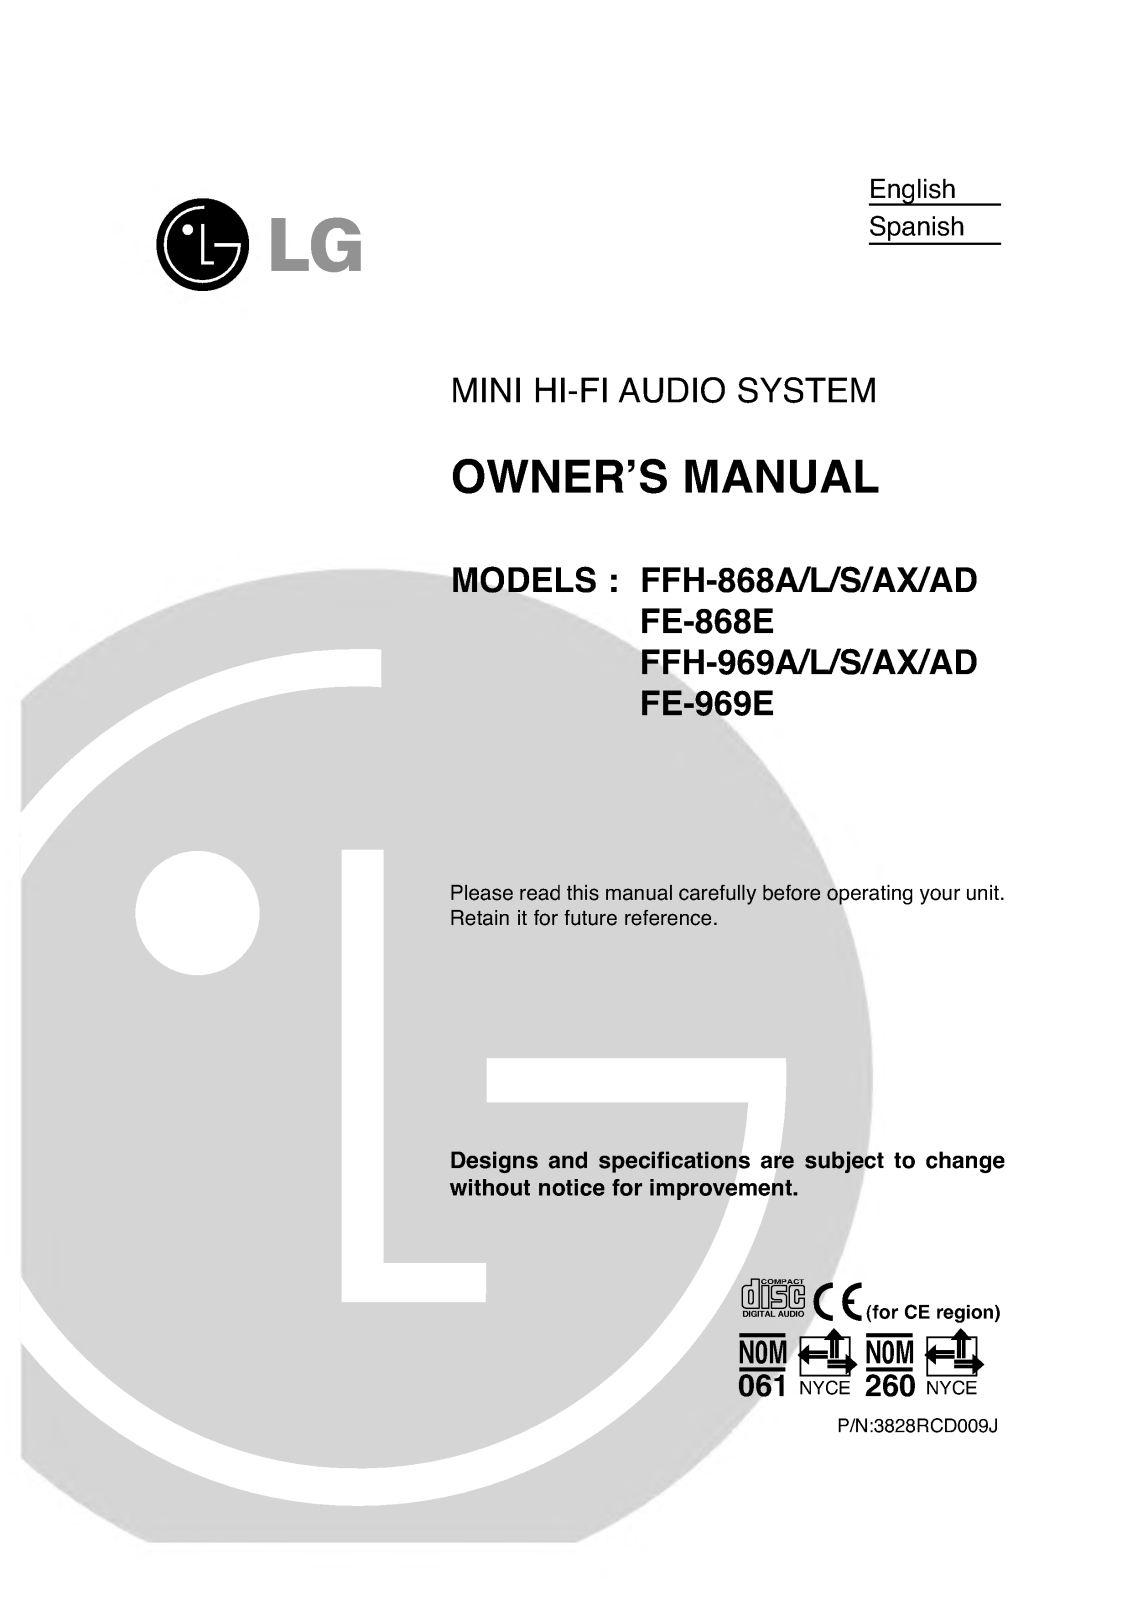 LG FFH-969A User Manual